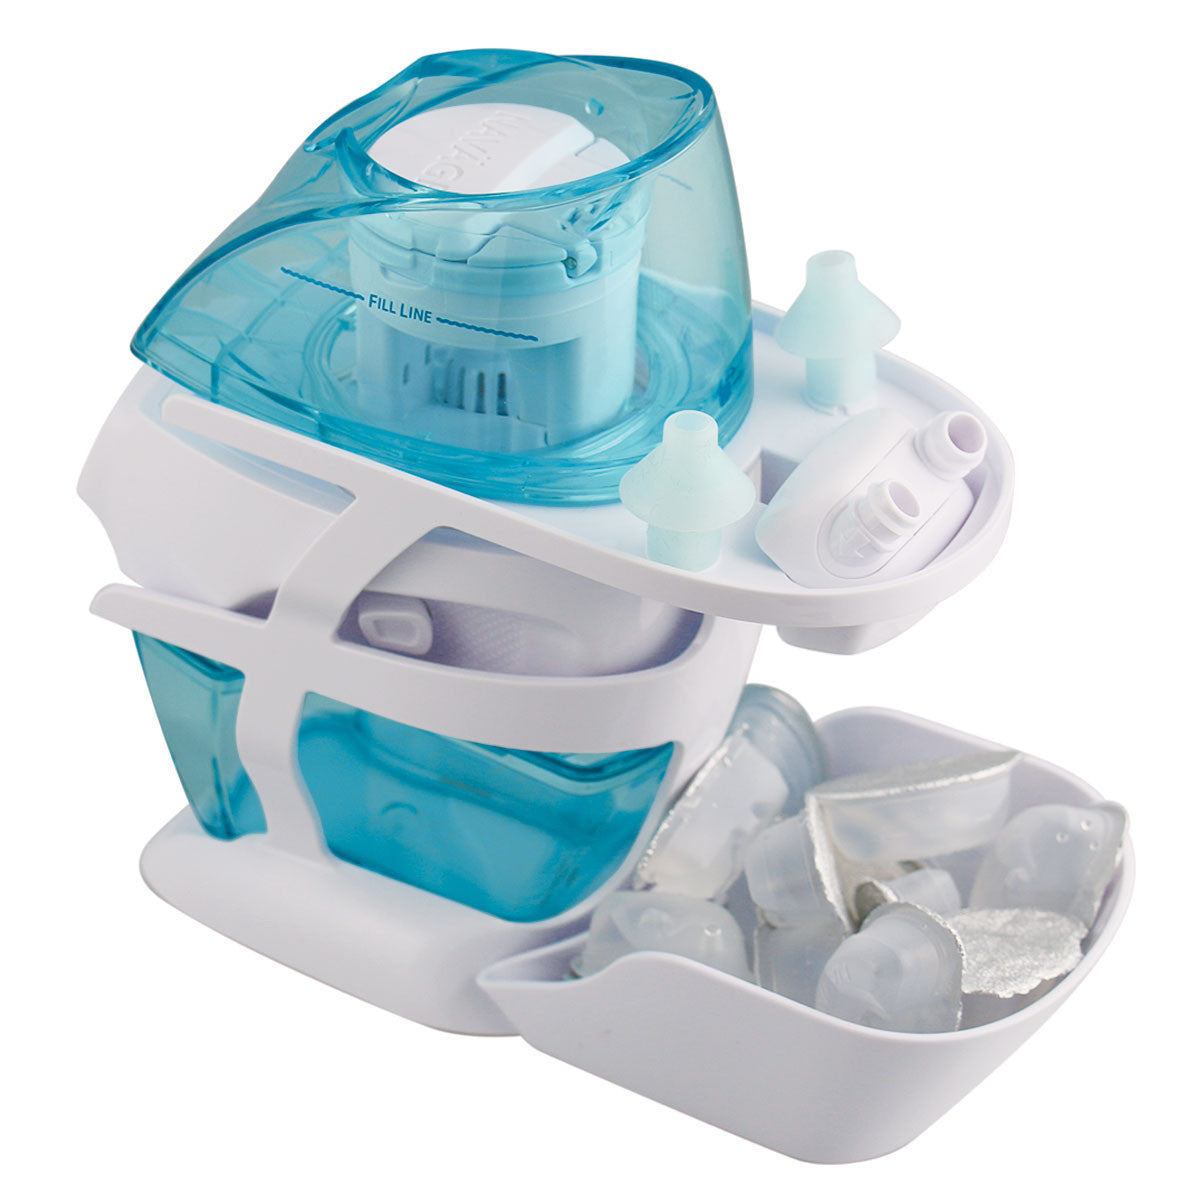 Naväge Essentials Plus Bundle: Nose Cleaner, 20 SaltPods, Countertop Caddy, Custom Cleaning Kit